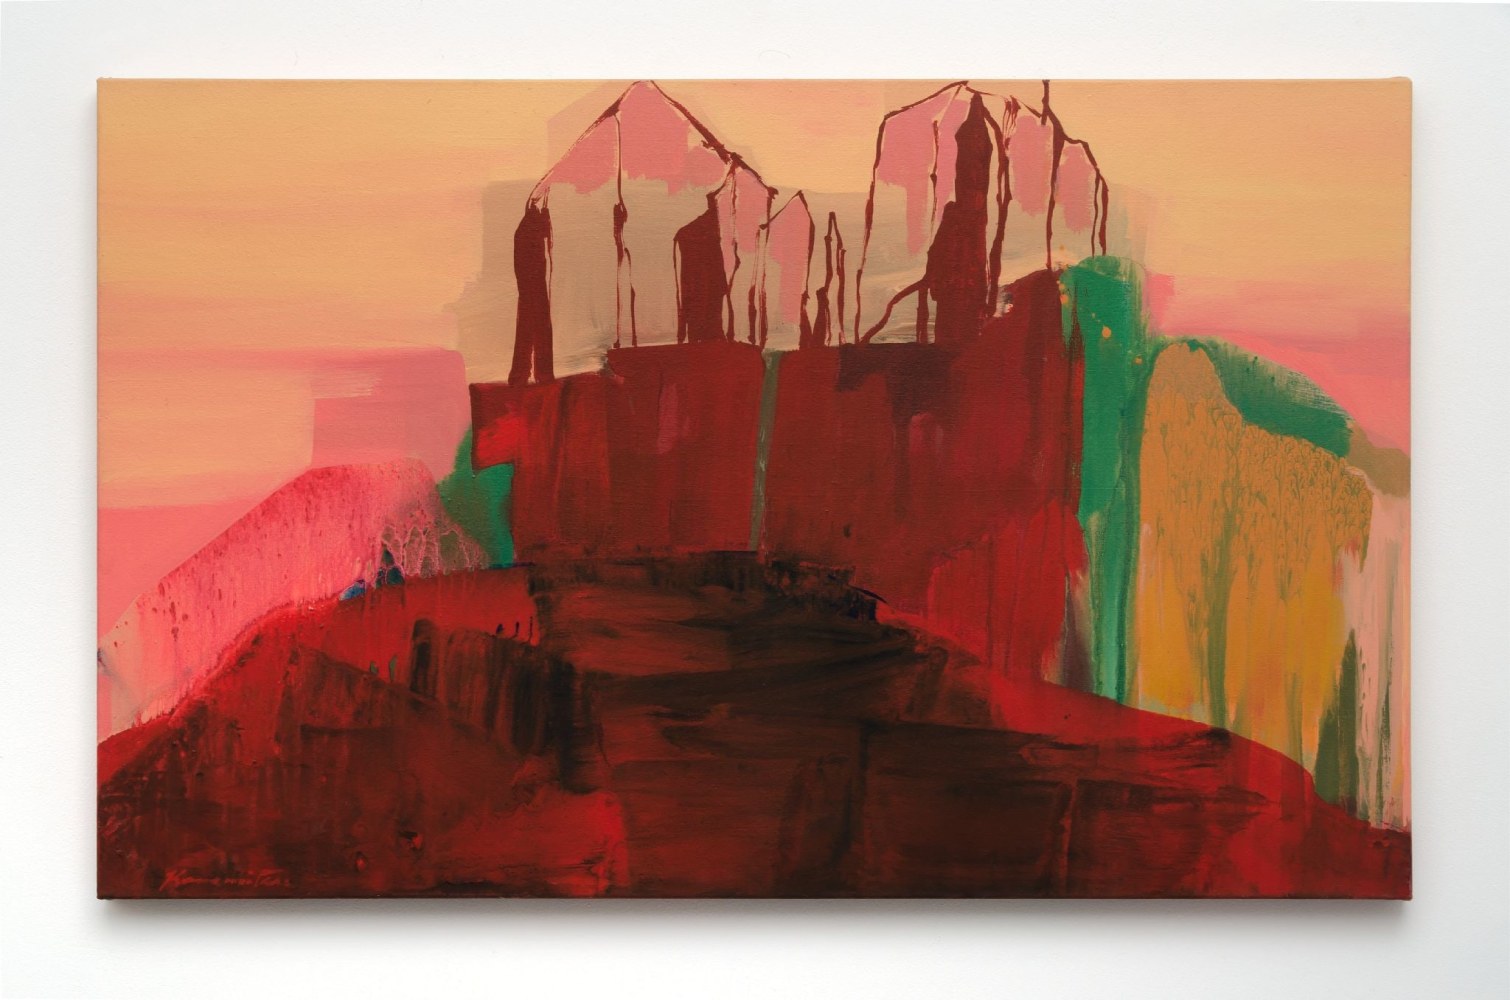 Matsumi Kanemitsu (1922-1992)
Sunset - Desert, 1989&amp;nbsp;&amp;nbsp;&amp;nbsp;&amp;nbsp;
acrylic on canvas
30 1/4 x 48 1/4 inches;&amp;nbsp;&amp;nbsp;76.8 x 122.6 centimeters
LSFA# 13938&amp;nbsp;